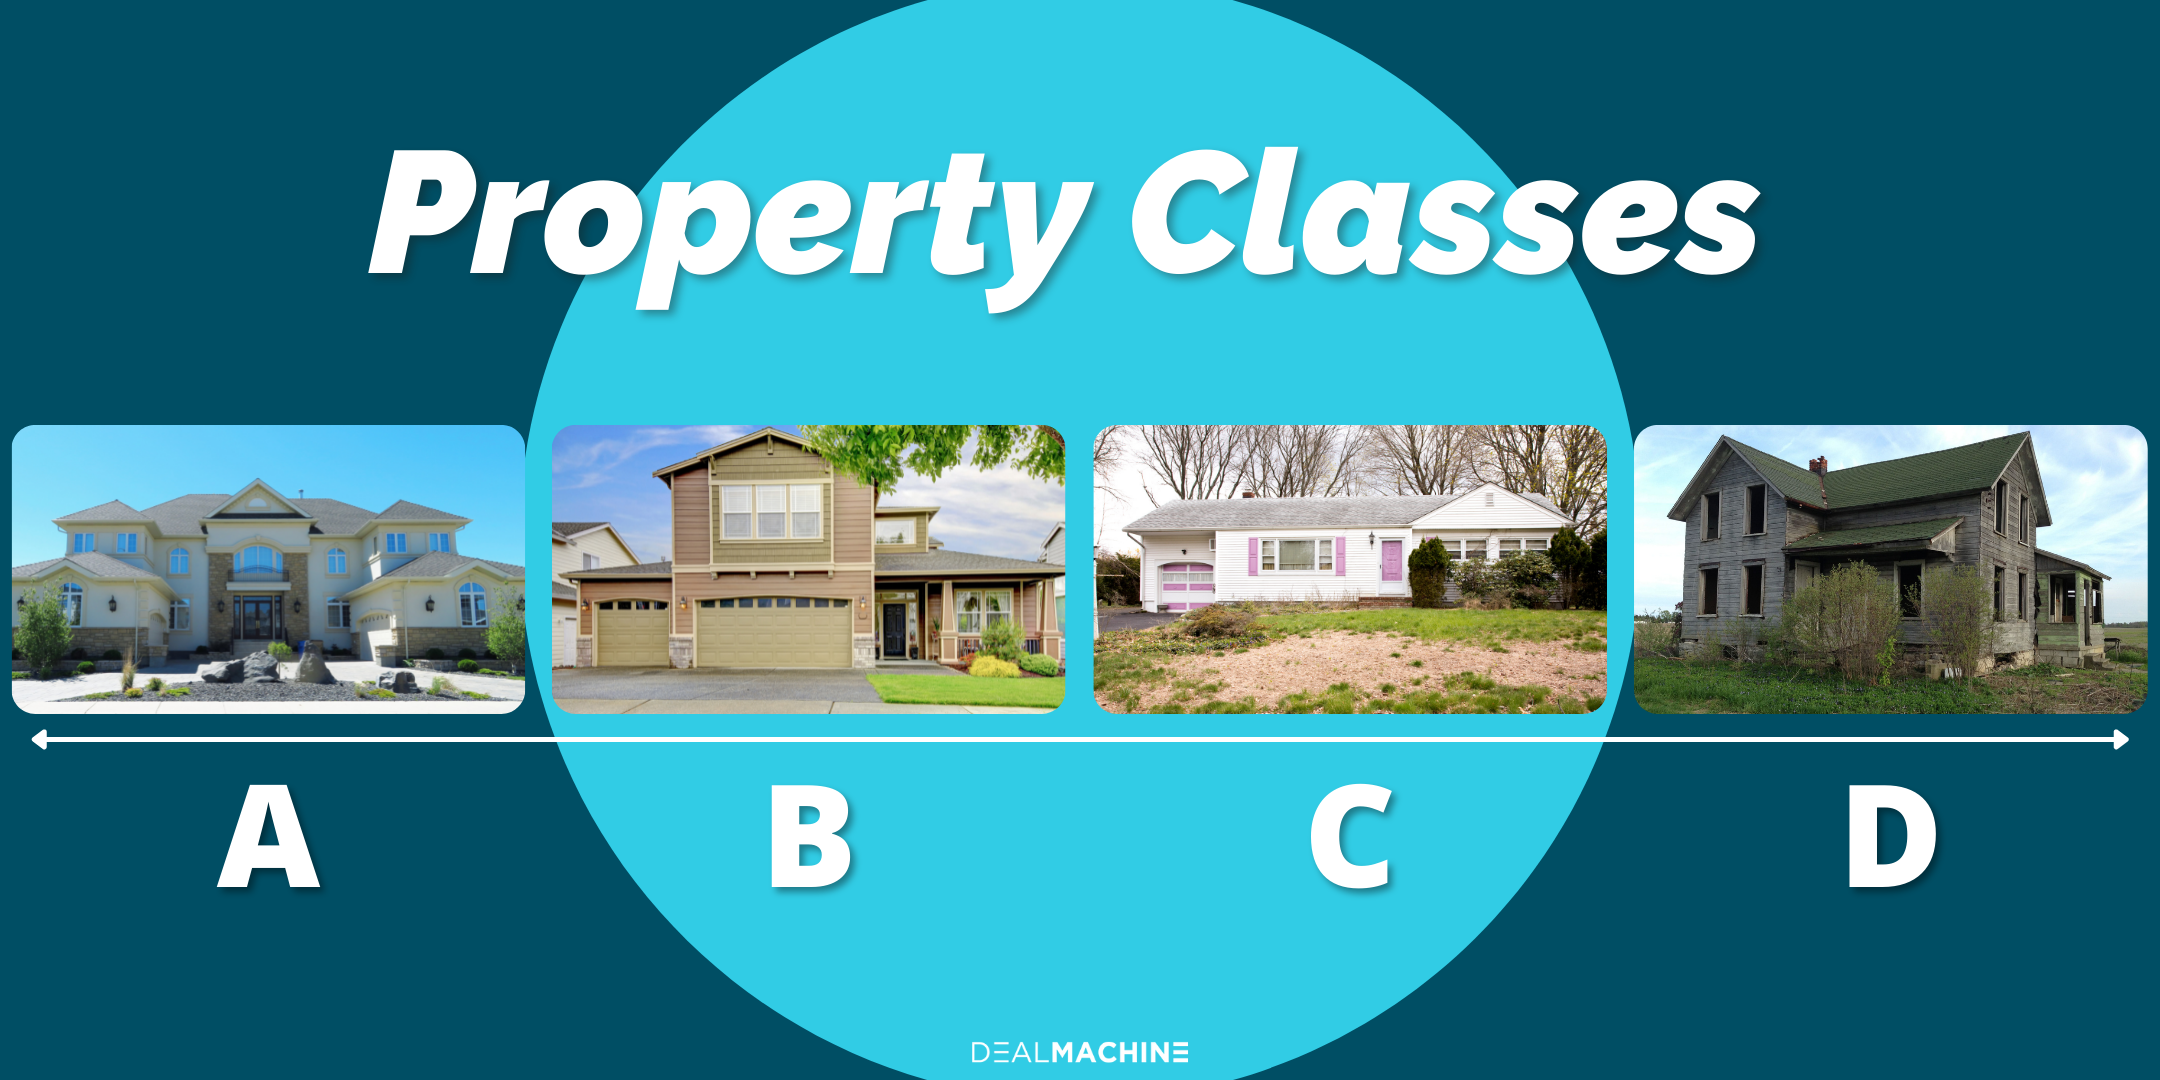 What is a Class A, Class B, Class C or Class D Property?